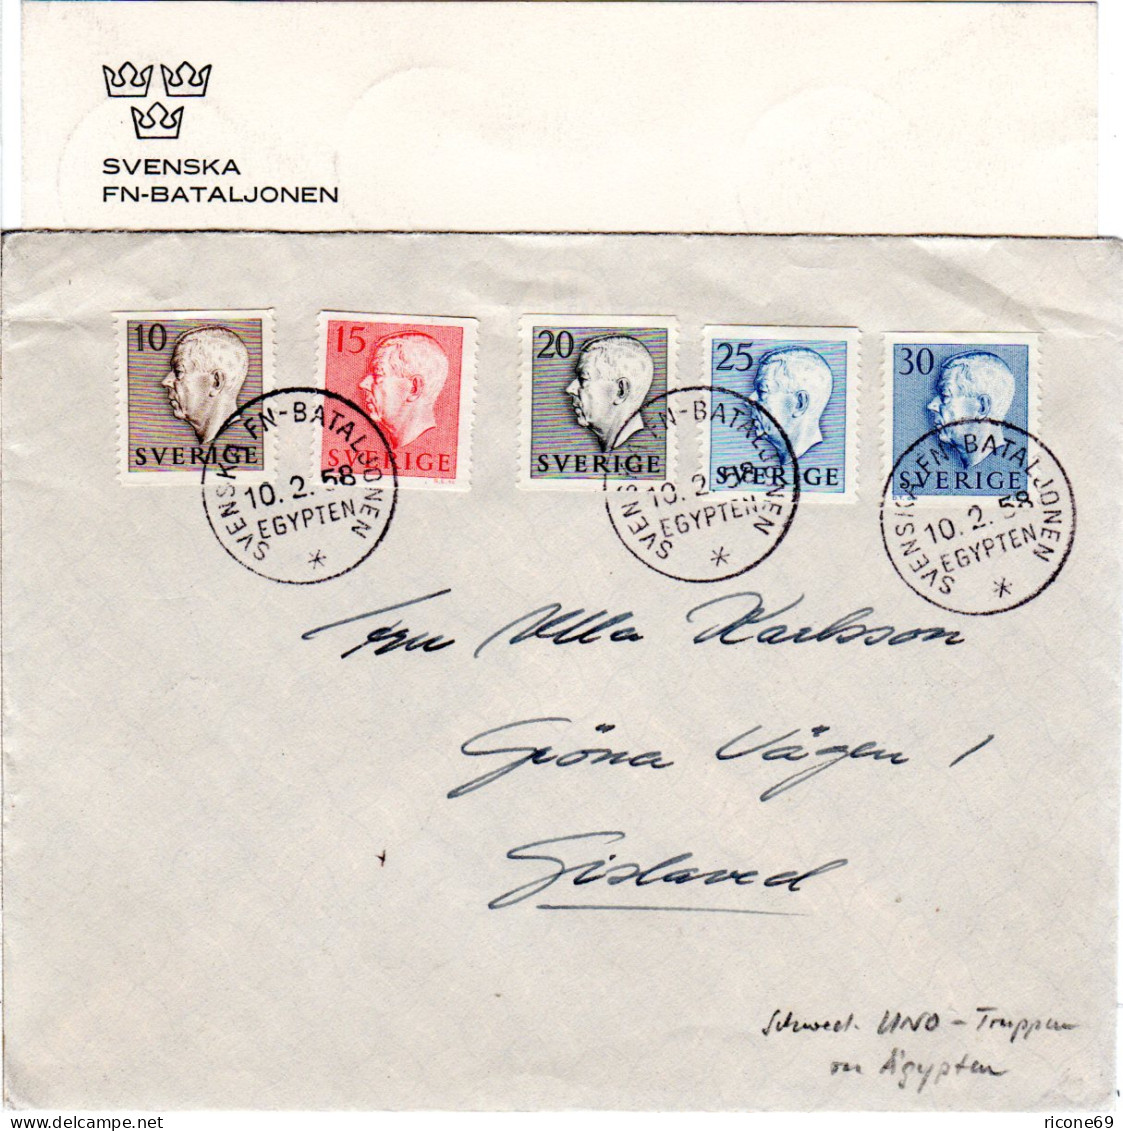 Schweden 1958, SVENSKA FN BATALJONEN EGYPTEN, Brief M. 5 Marken - Briefe U. Dokumente